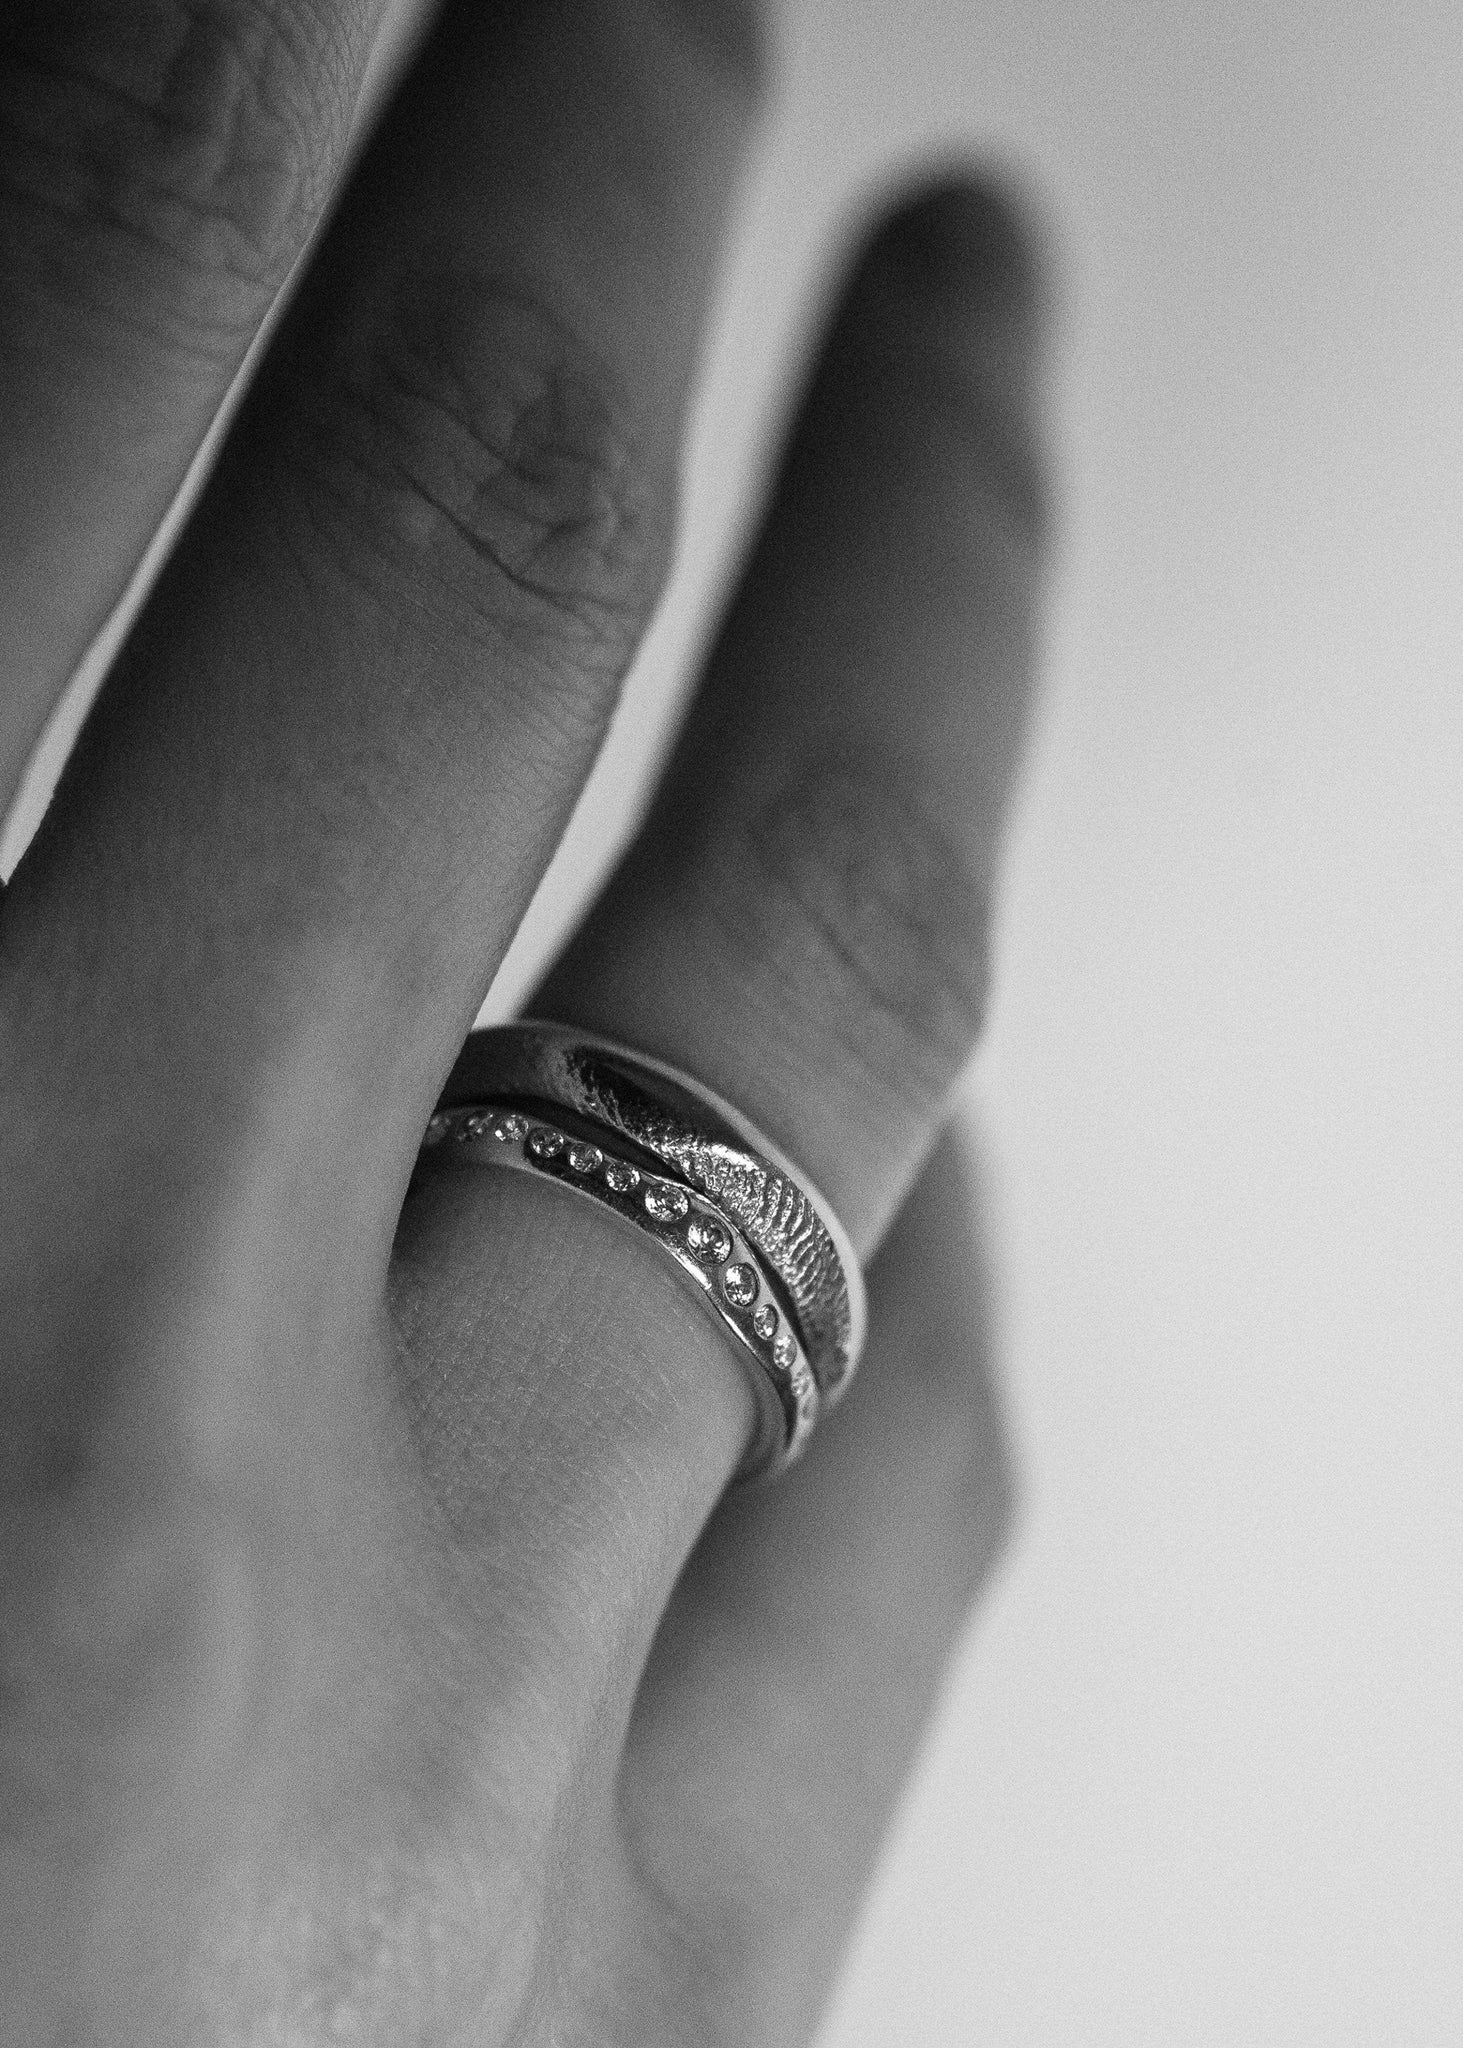 Molded Unisex Finger-Printed Band Medium - White Gold or Sterling Silver Cornelia Webb Ring